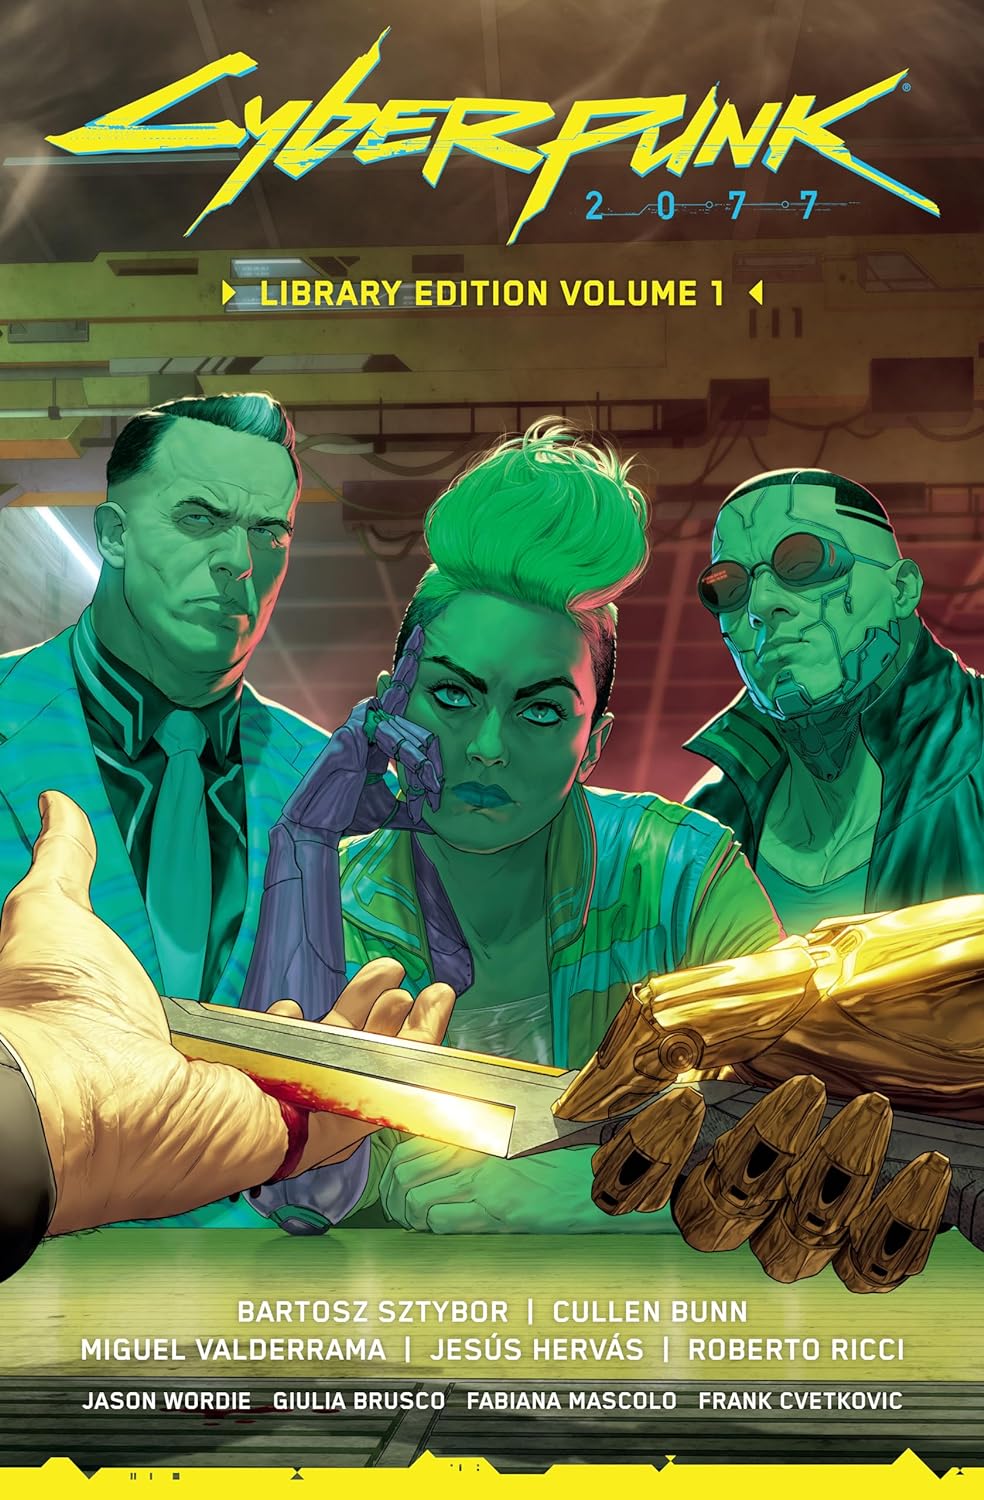 Publisher Dark Horse Comics - Cyberpunk 2077 (Library Edition Volume 1) - Cullen Bunn